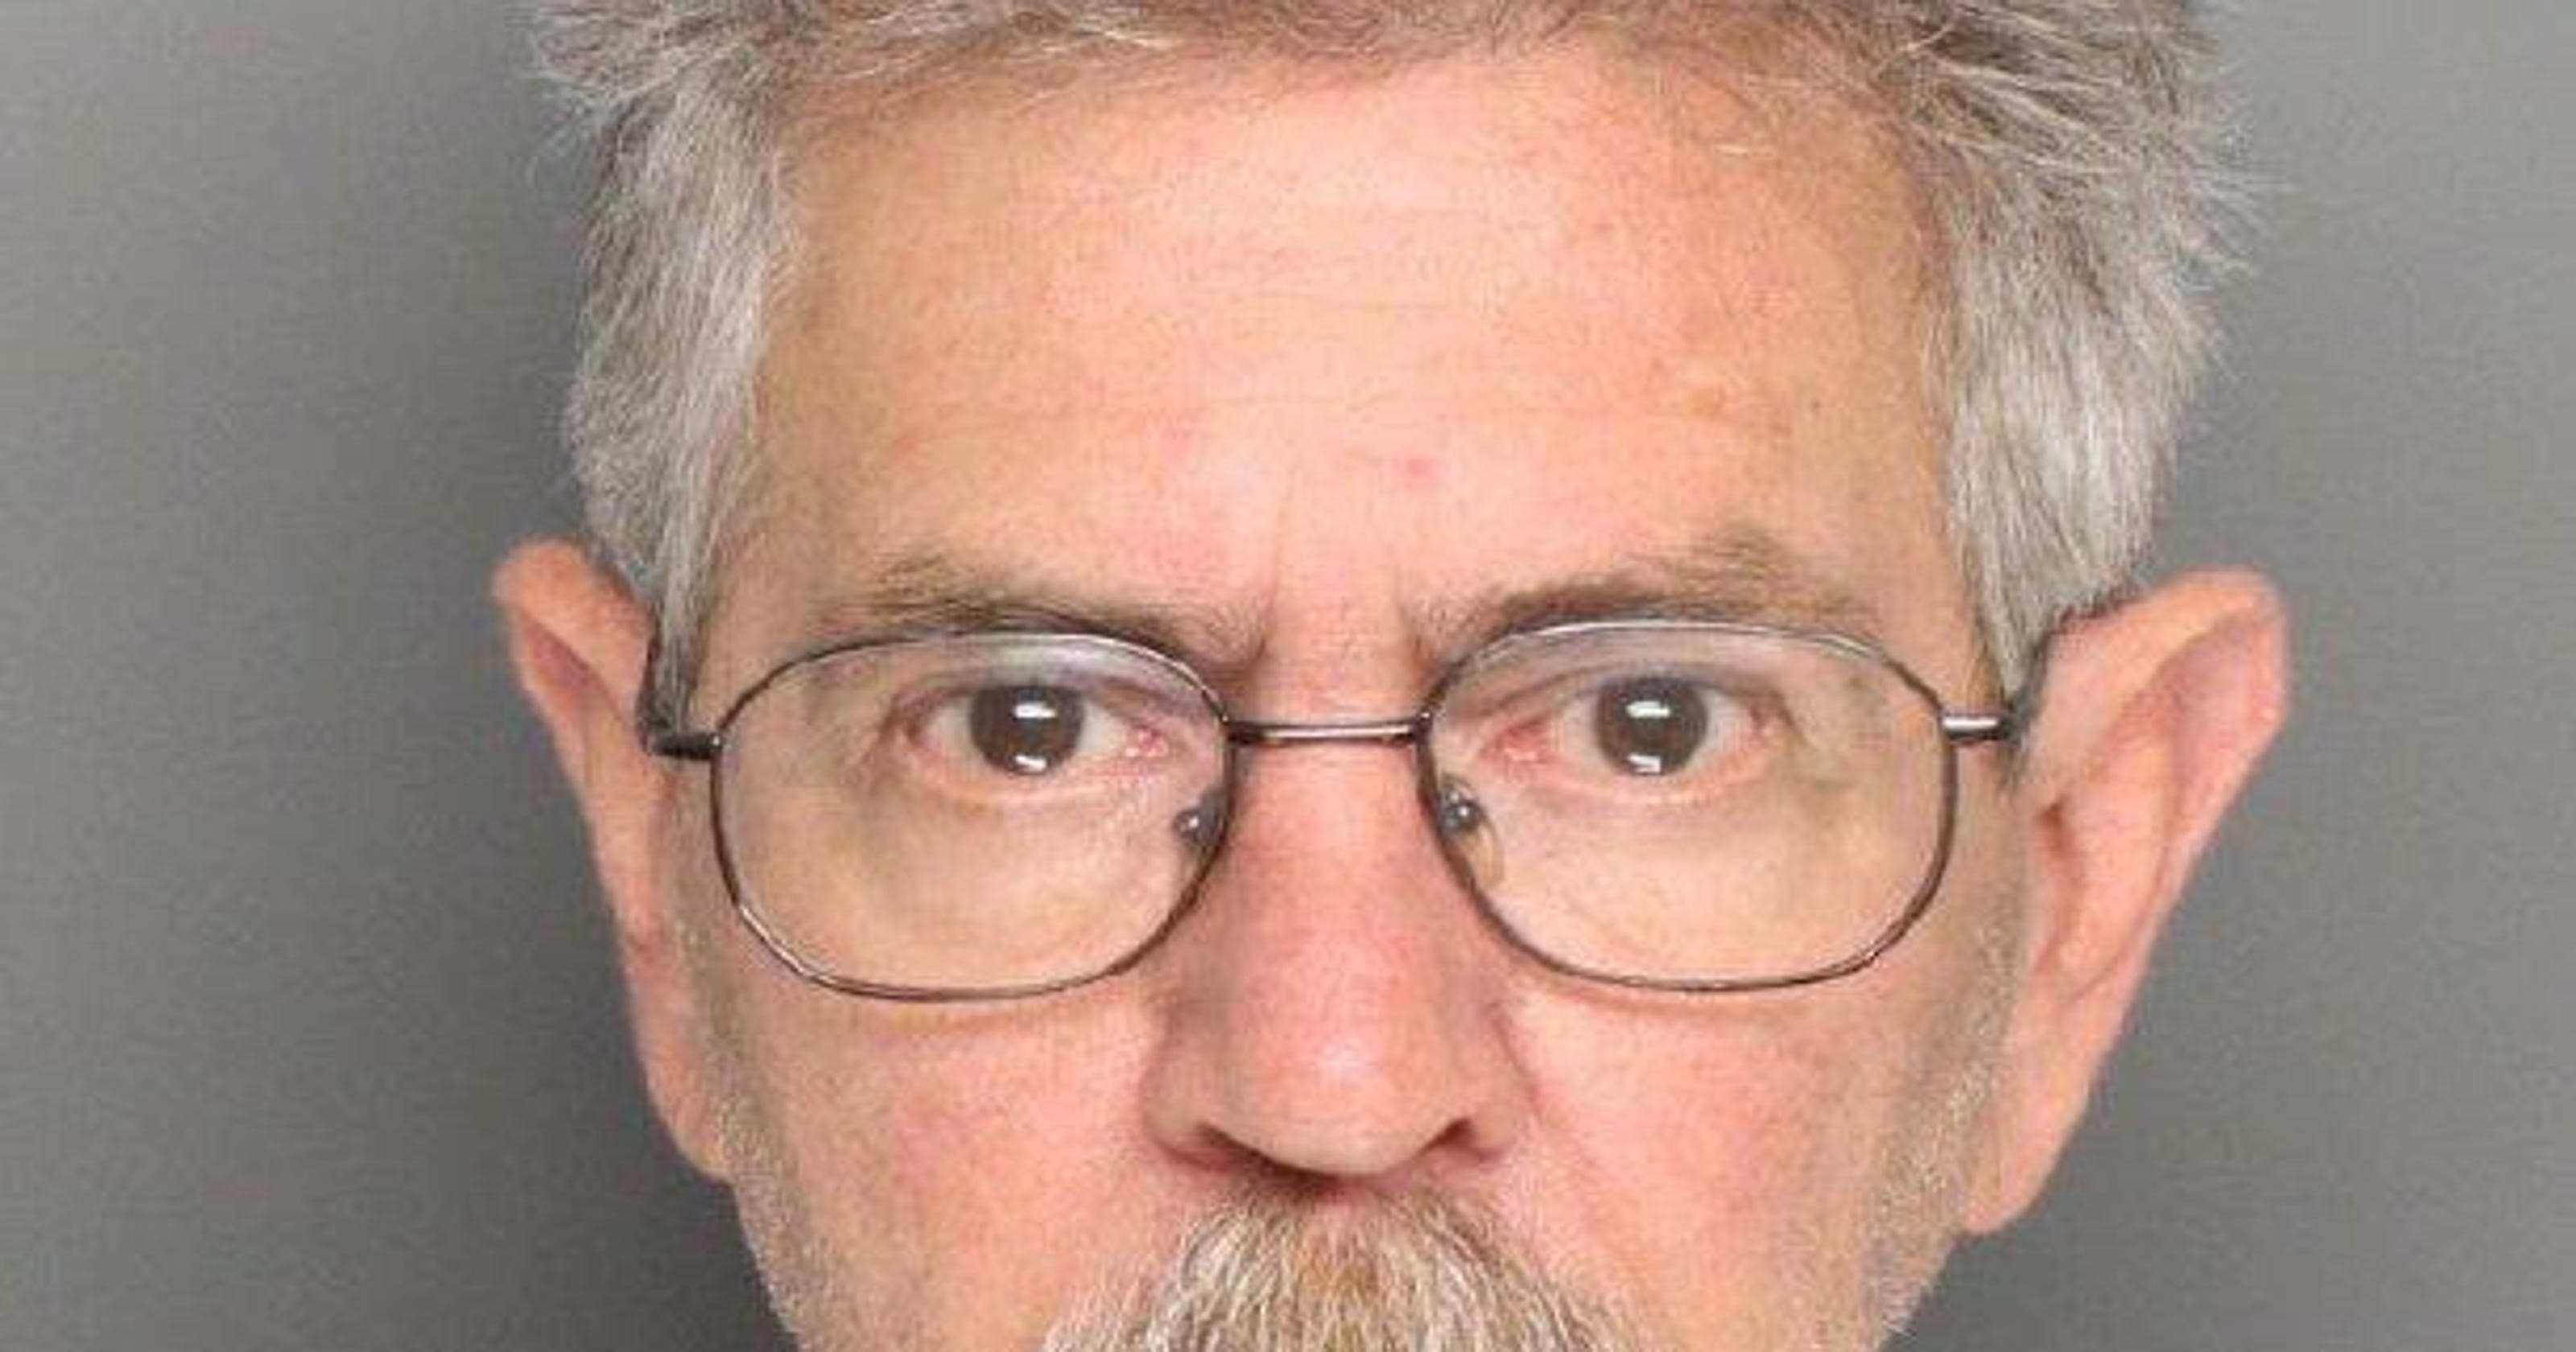 Arrest - 13,000 files of child porn sends SC man to house arrest, AG says